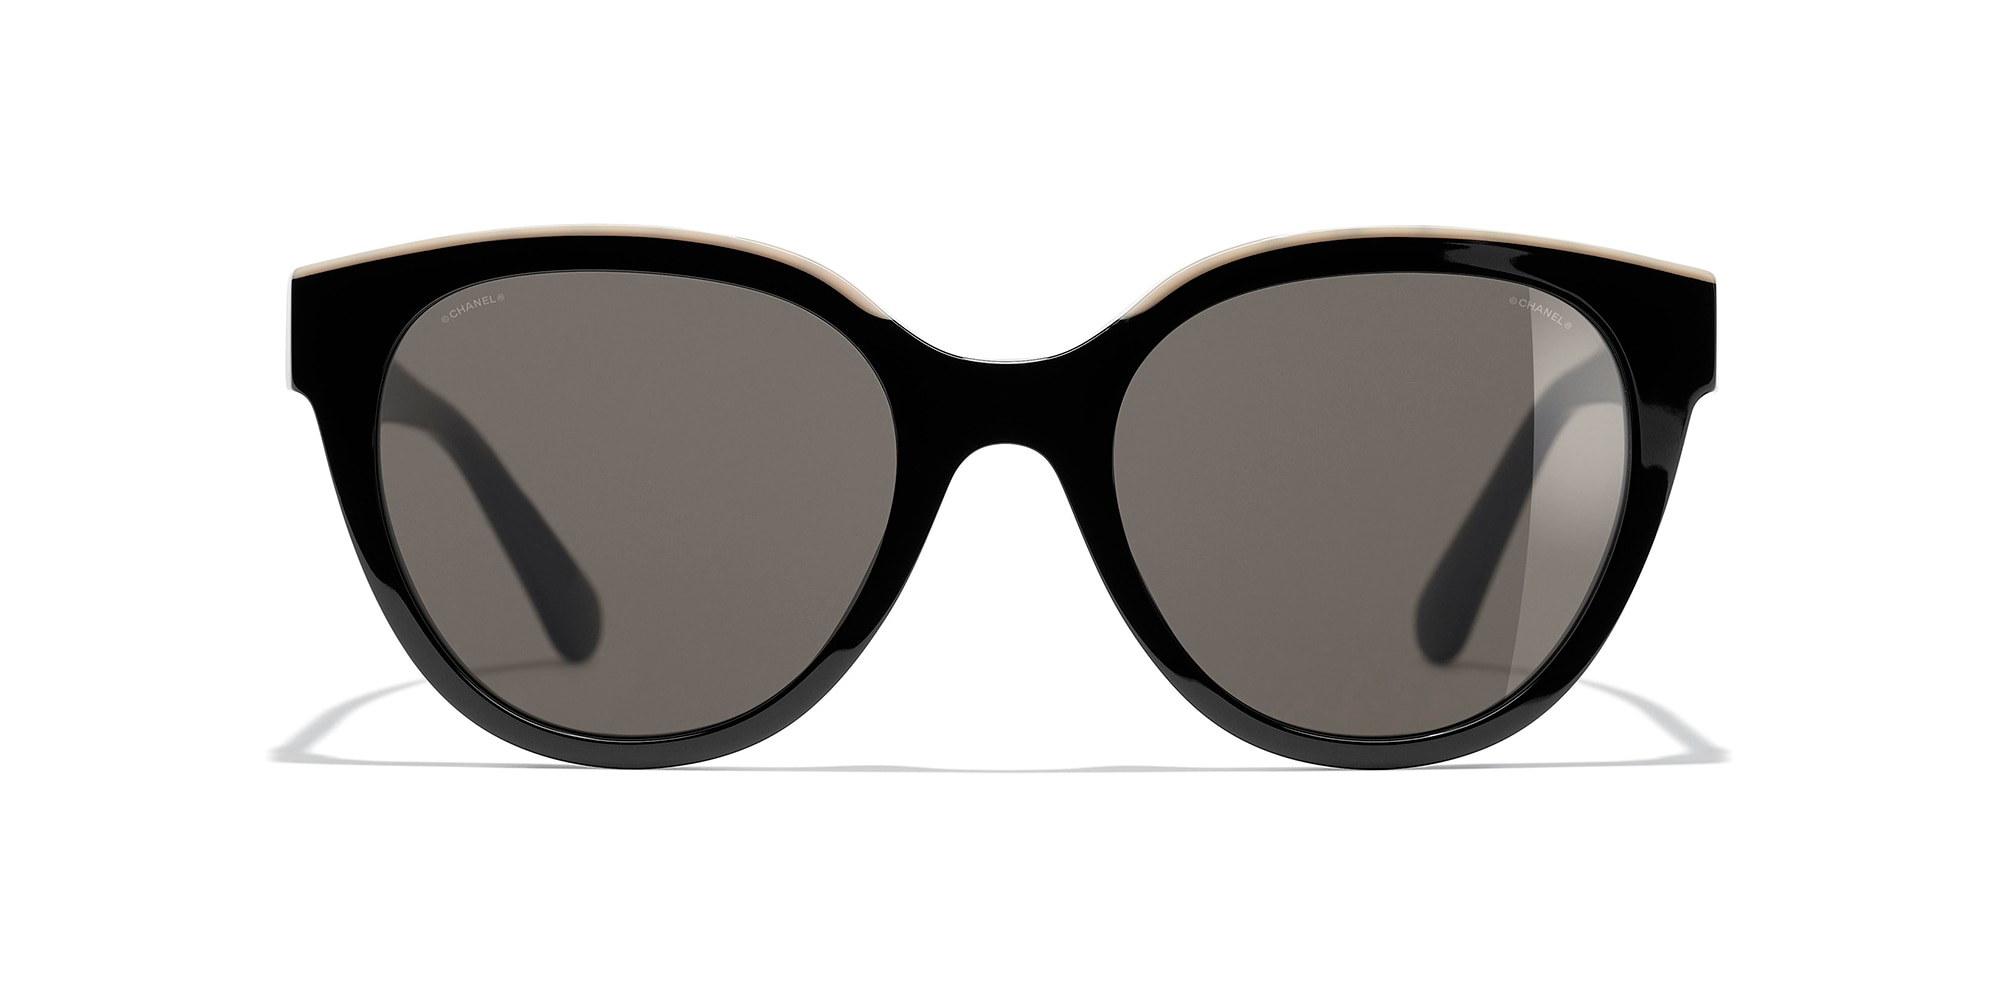 CHANEL Angular sunglasses in c622s6  black black polarized  Breuninger